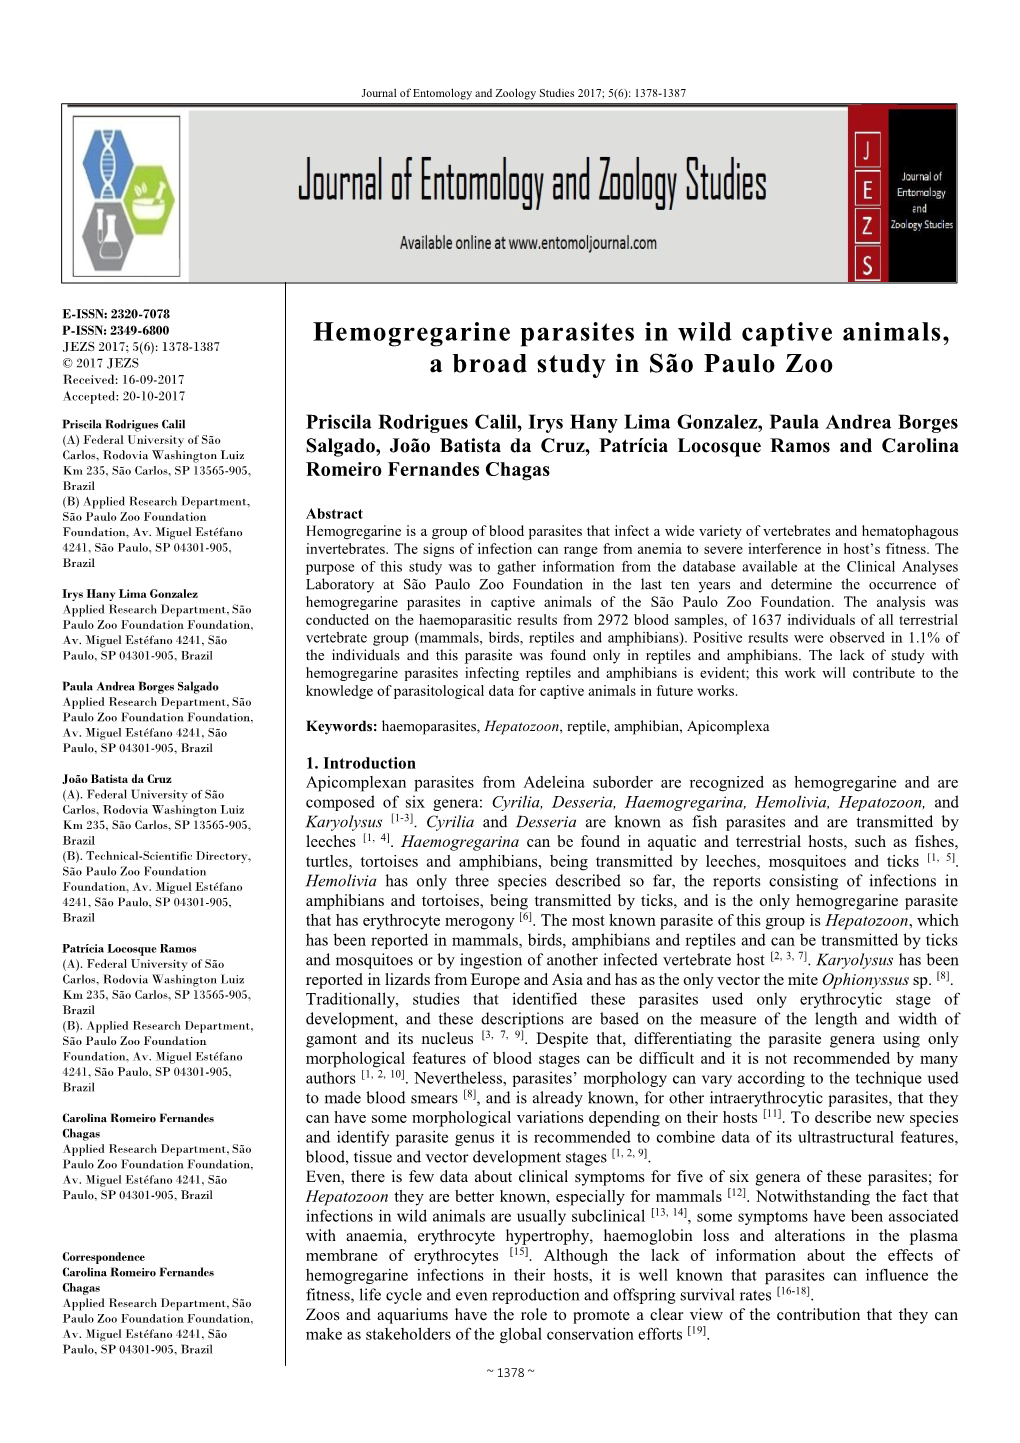 Hemogregarine Parasites in Wild Captive Animals, a Broad Study In